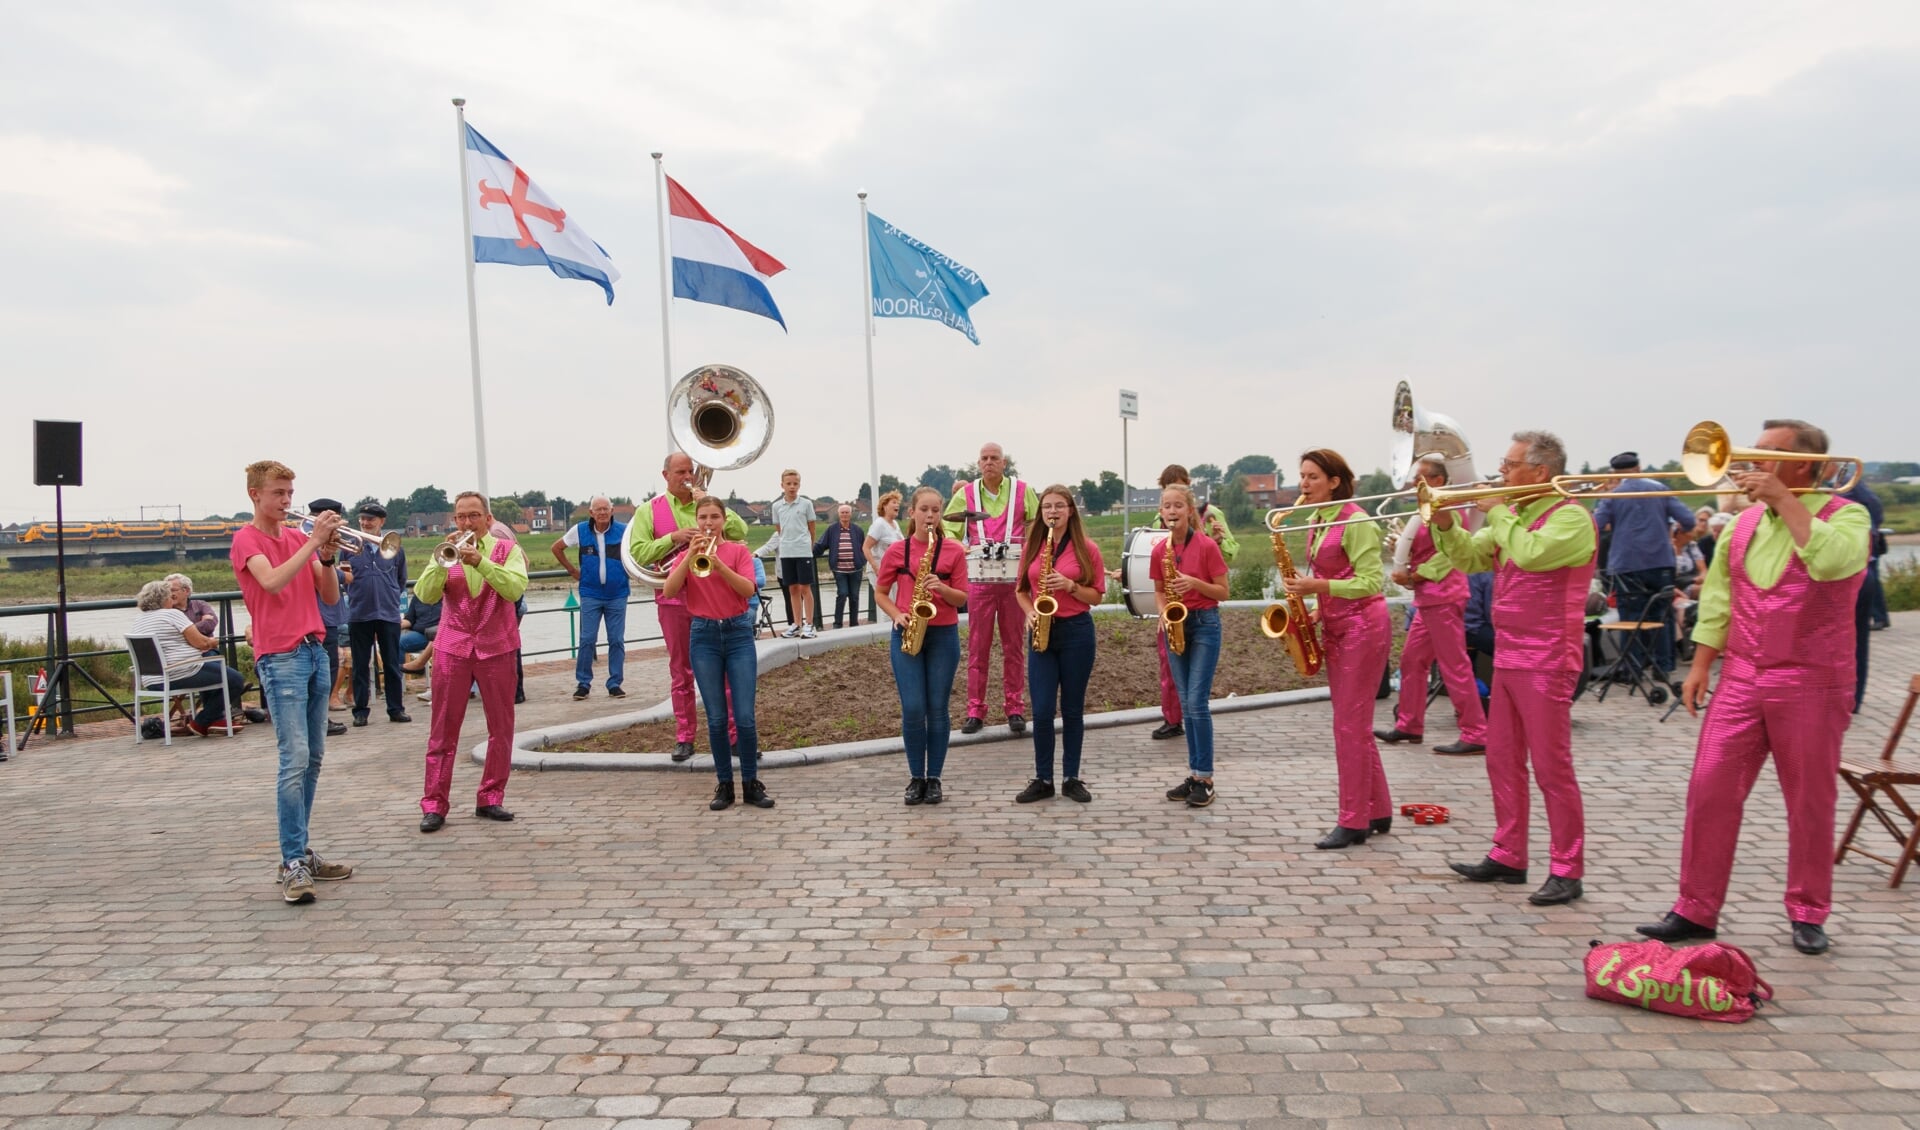 Dweilorkest ’t Spul(t) speelt met de vlaggen op de achtergrond. Foto: Henk Derksen